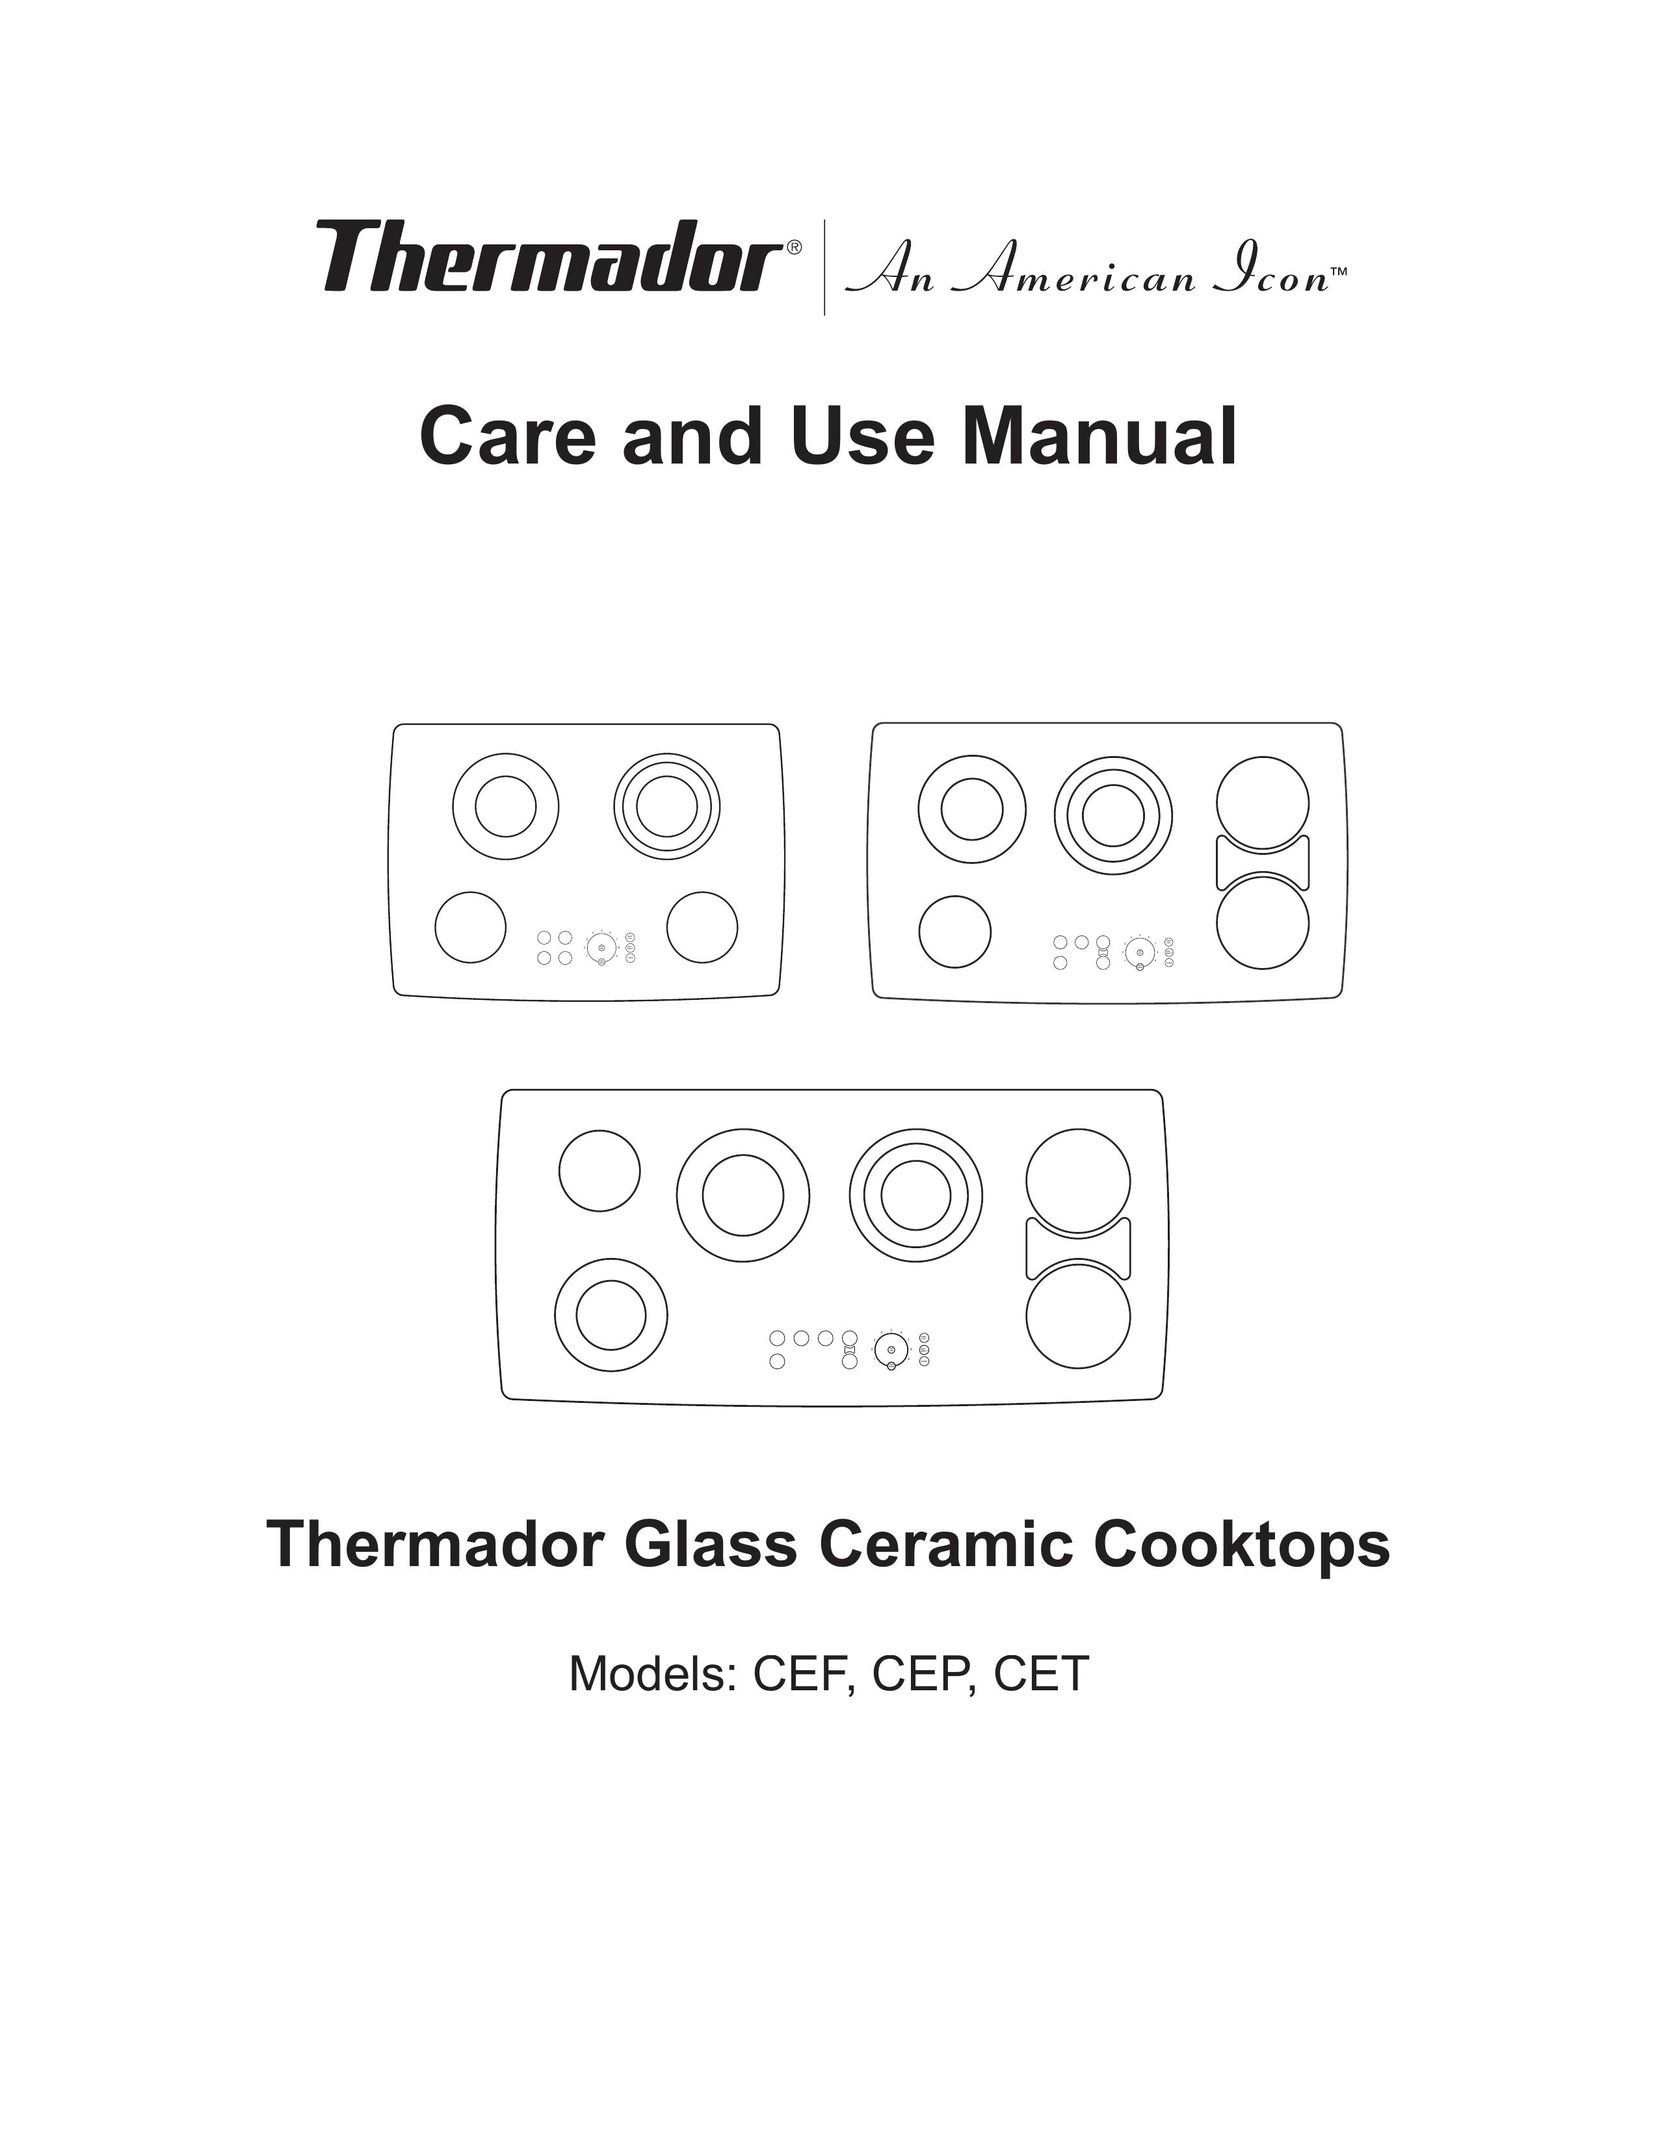 Thermador CEP Cooktop User Manual